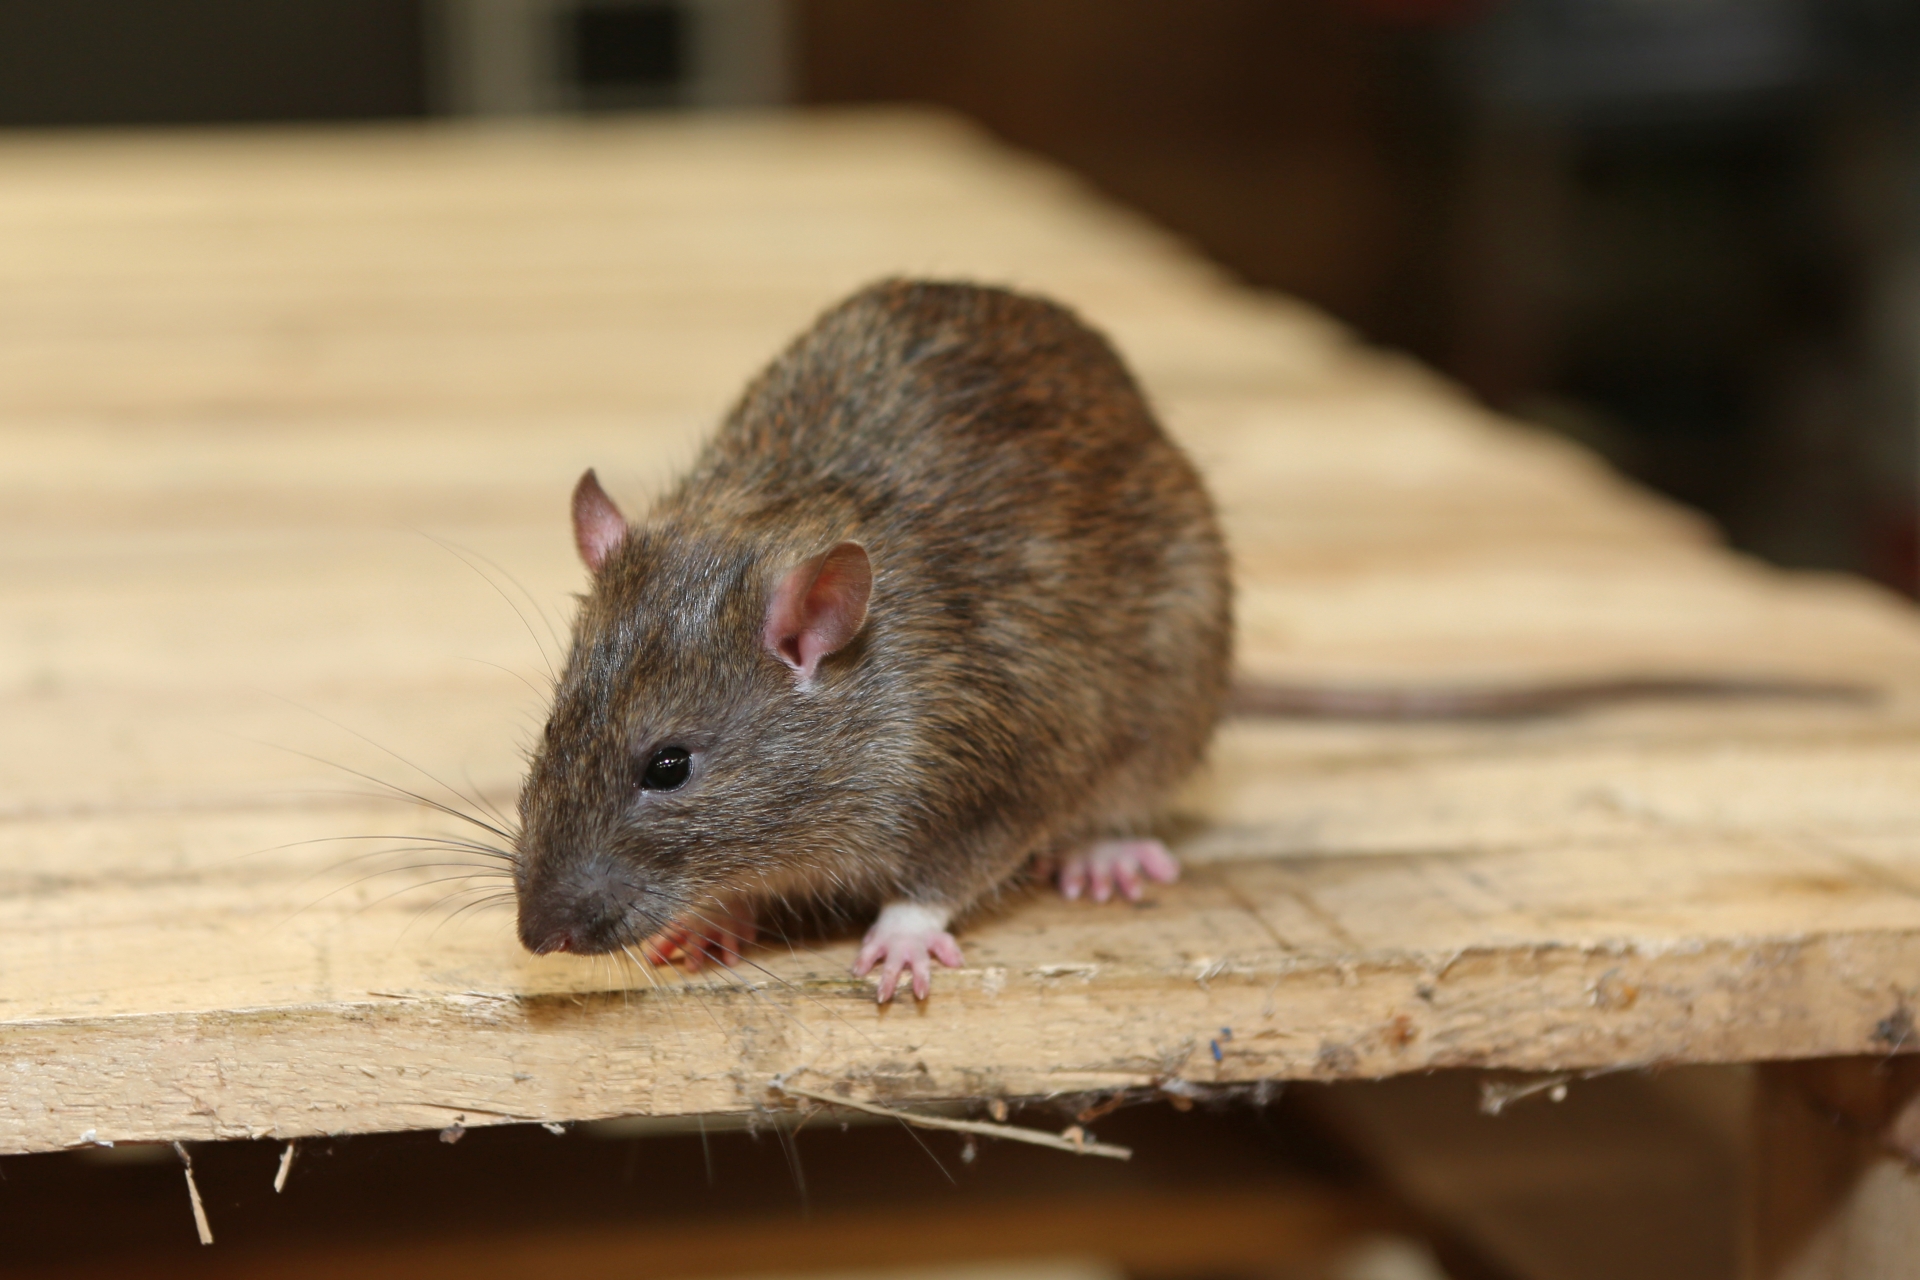 Rat extermination, Pest Control in Merton, SW19. Call Now 020 8166 9746